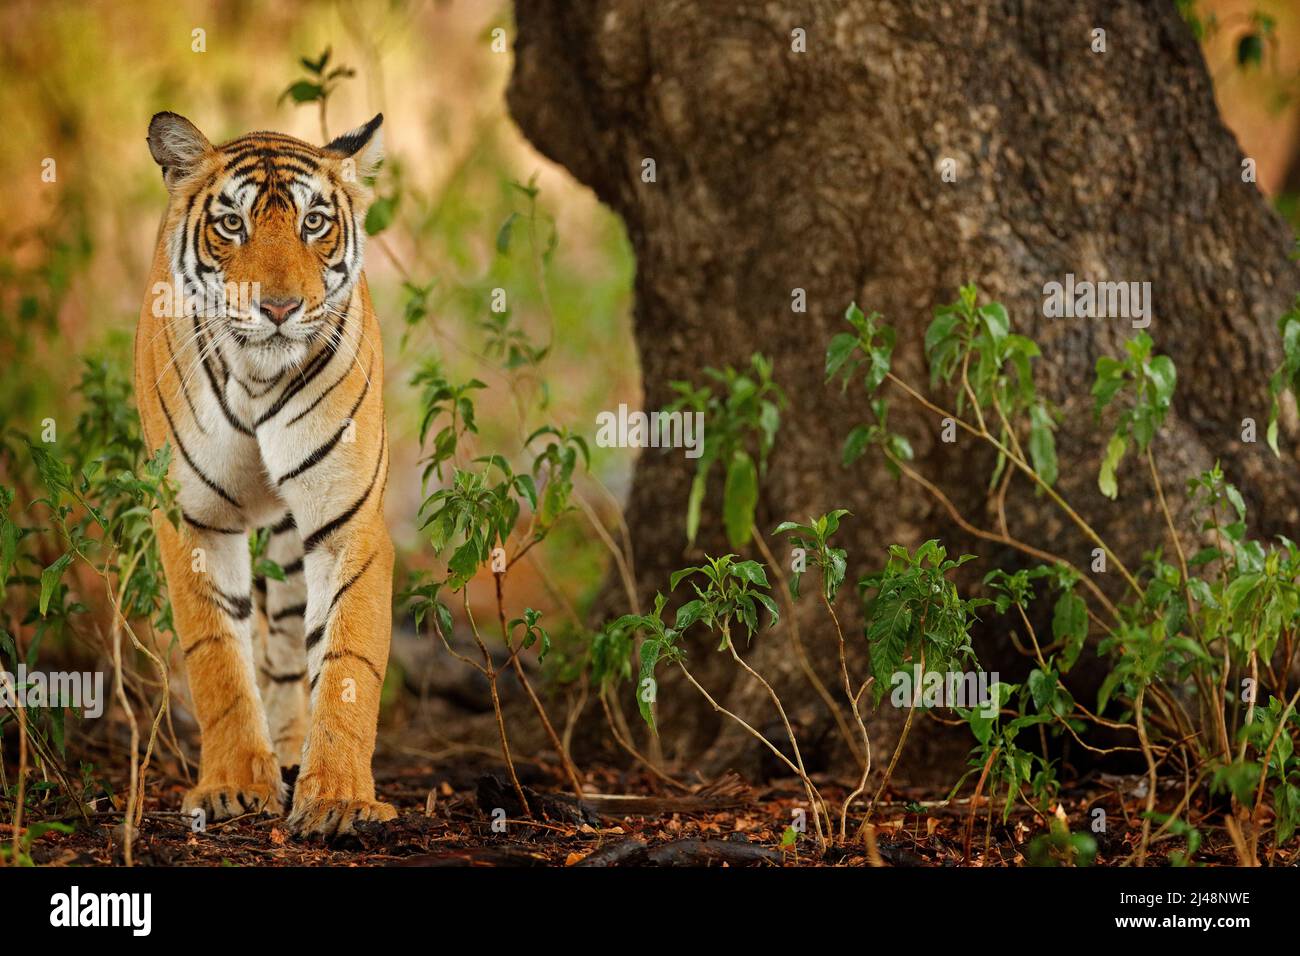 Big cat, endangered animal hidden in forest. End of dry season. Tiger walking in green vegetation. Wild Asia, wildlife India. Indian tiger, wild anima Stock Photo